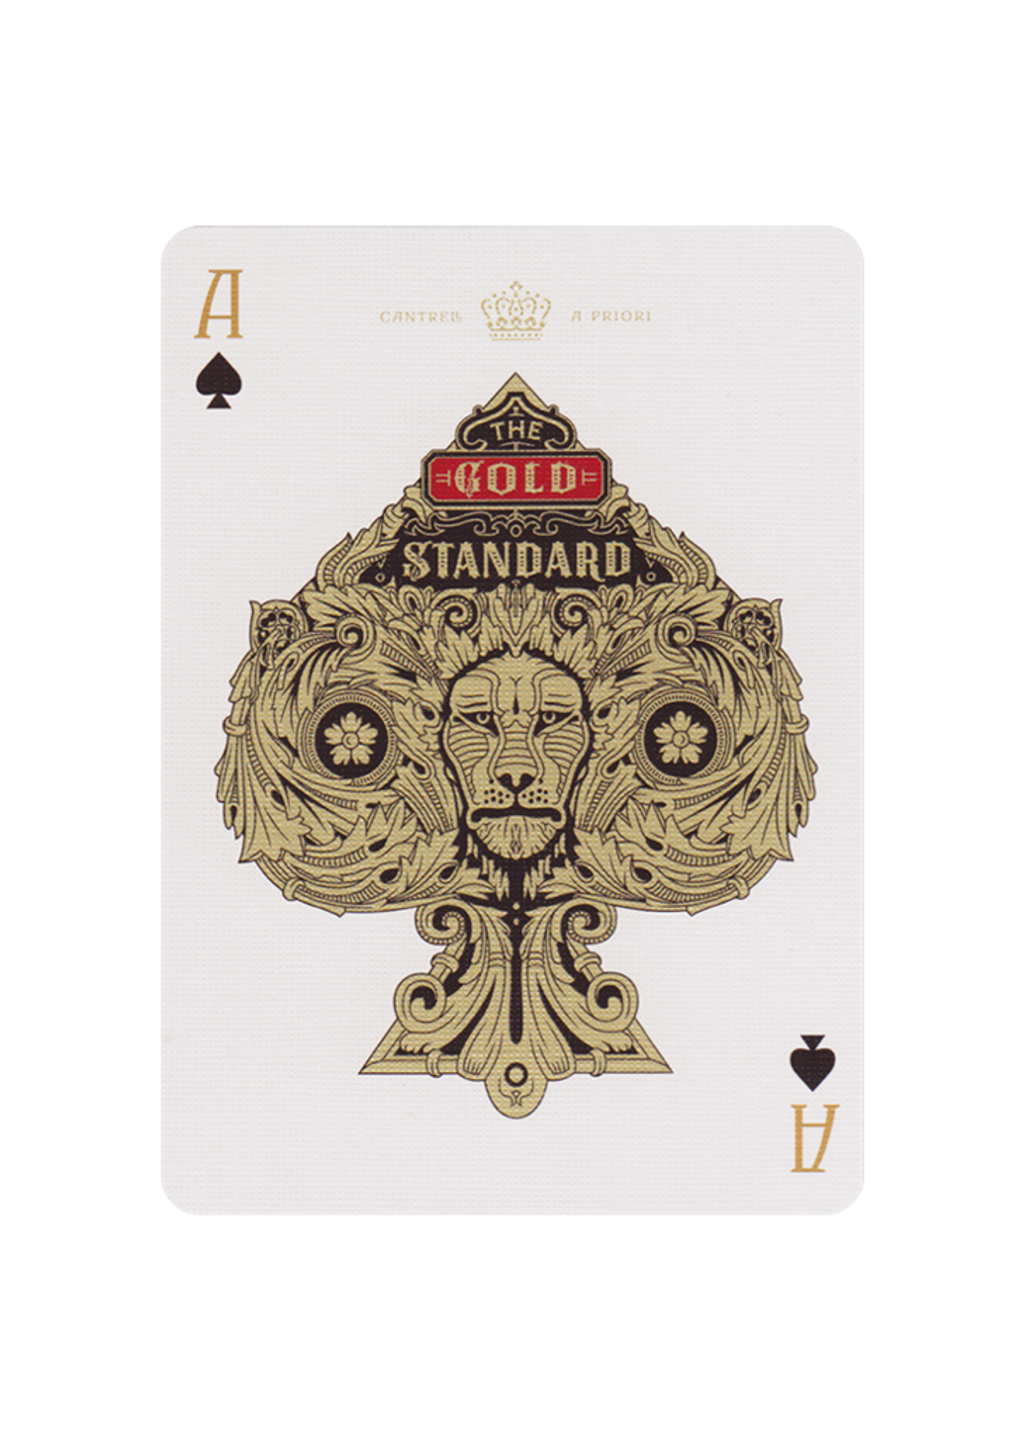 standards-ace-spades_1024x1024.png